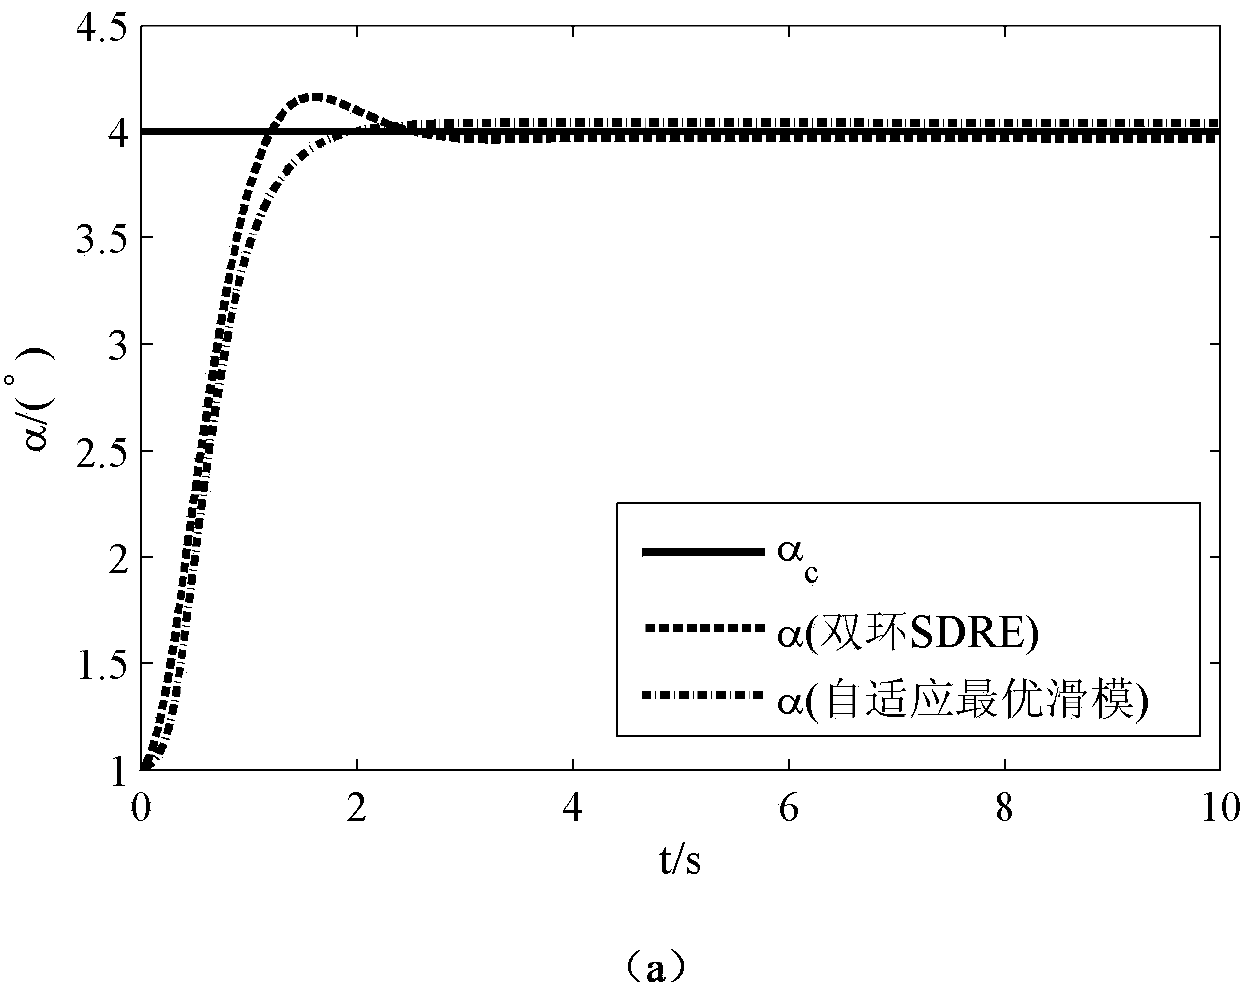 Method for controlling reentry vehicle self-adapting optimal sliding mode attitude based on SDRE (state dependence matrix Riccati equation)